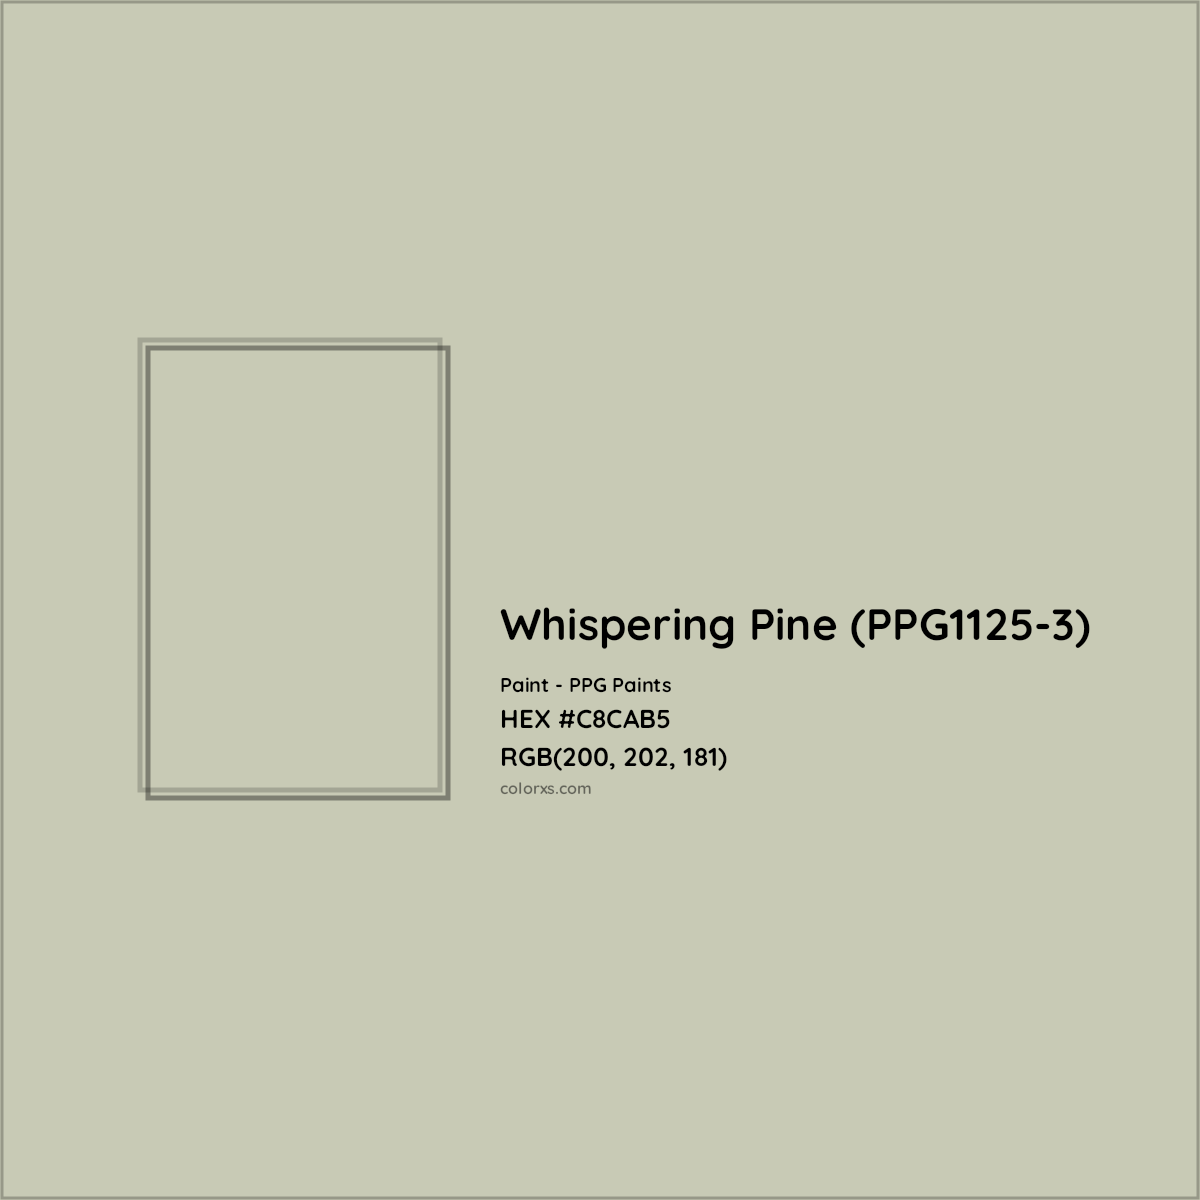 HEX #C8CAB5 Whispering Pine (PPG1125-3) Paint PPG Paints - Color Code